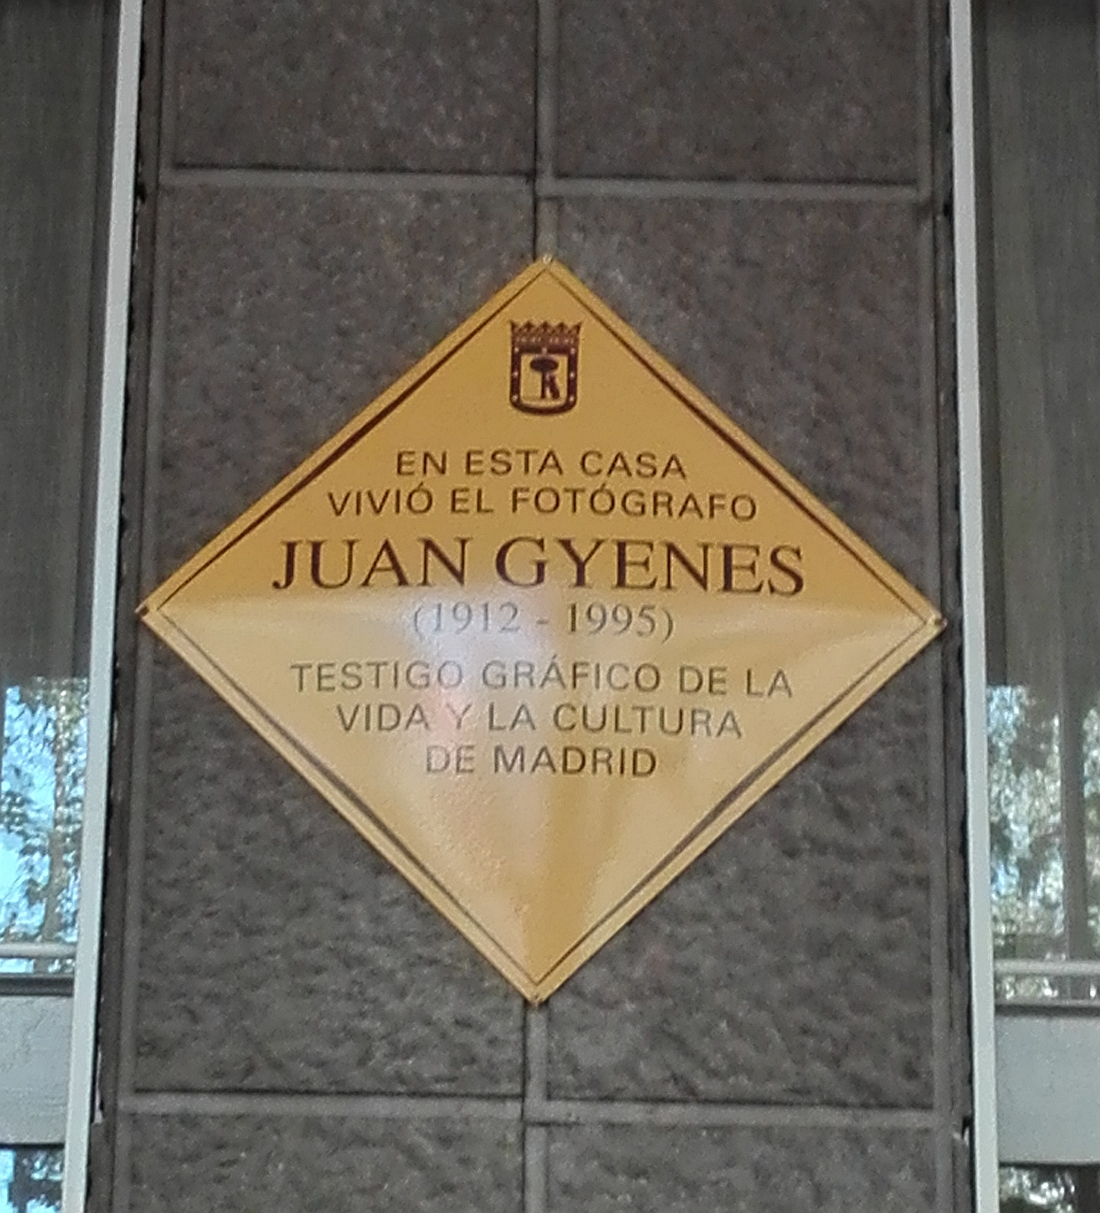 Juan Gyenes